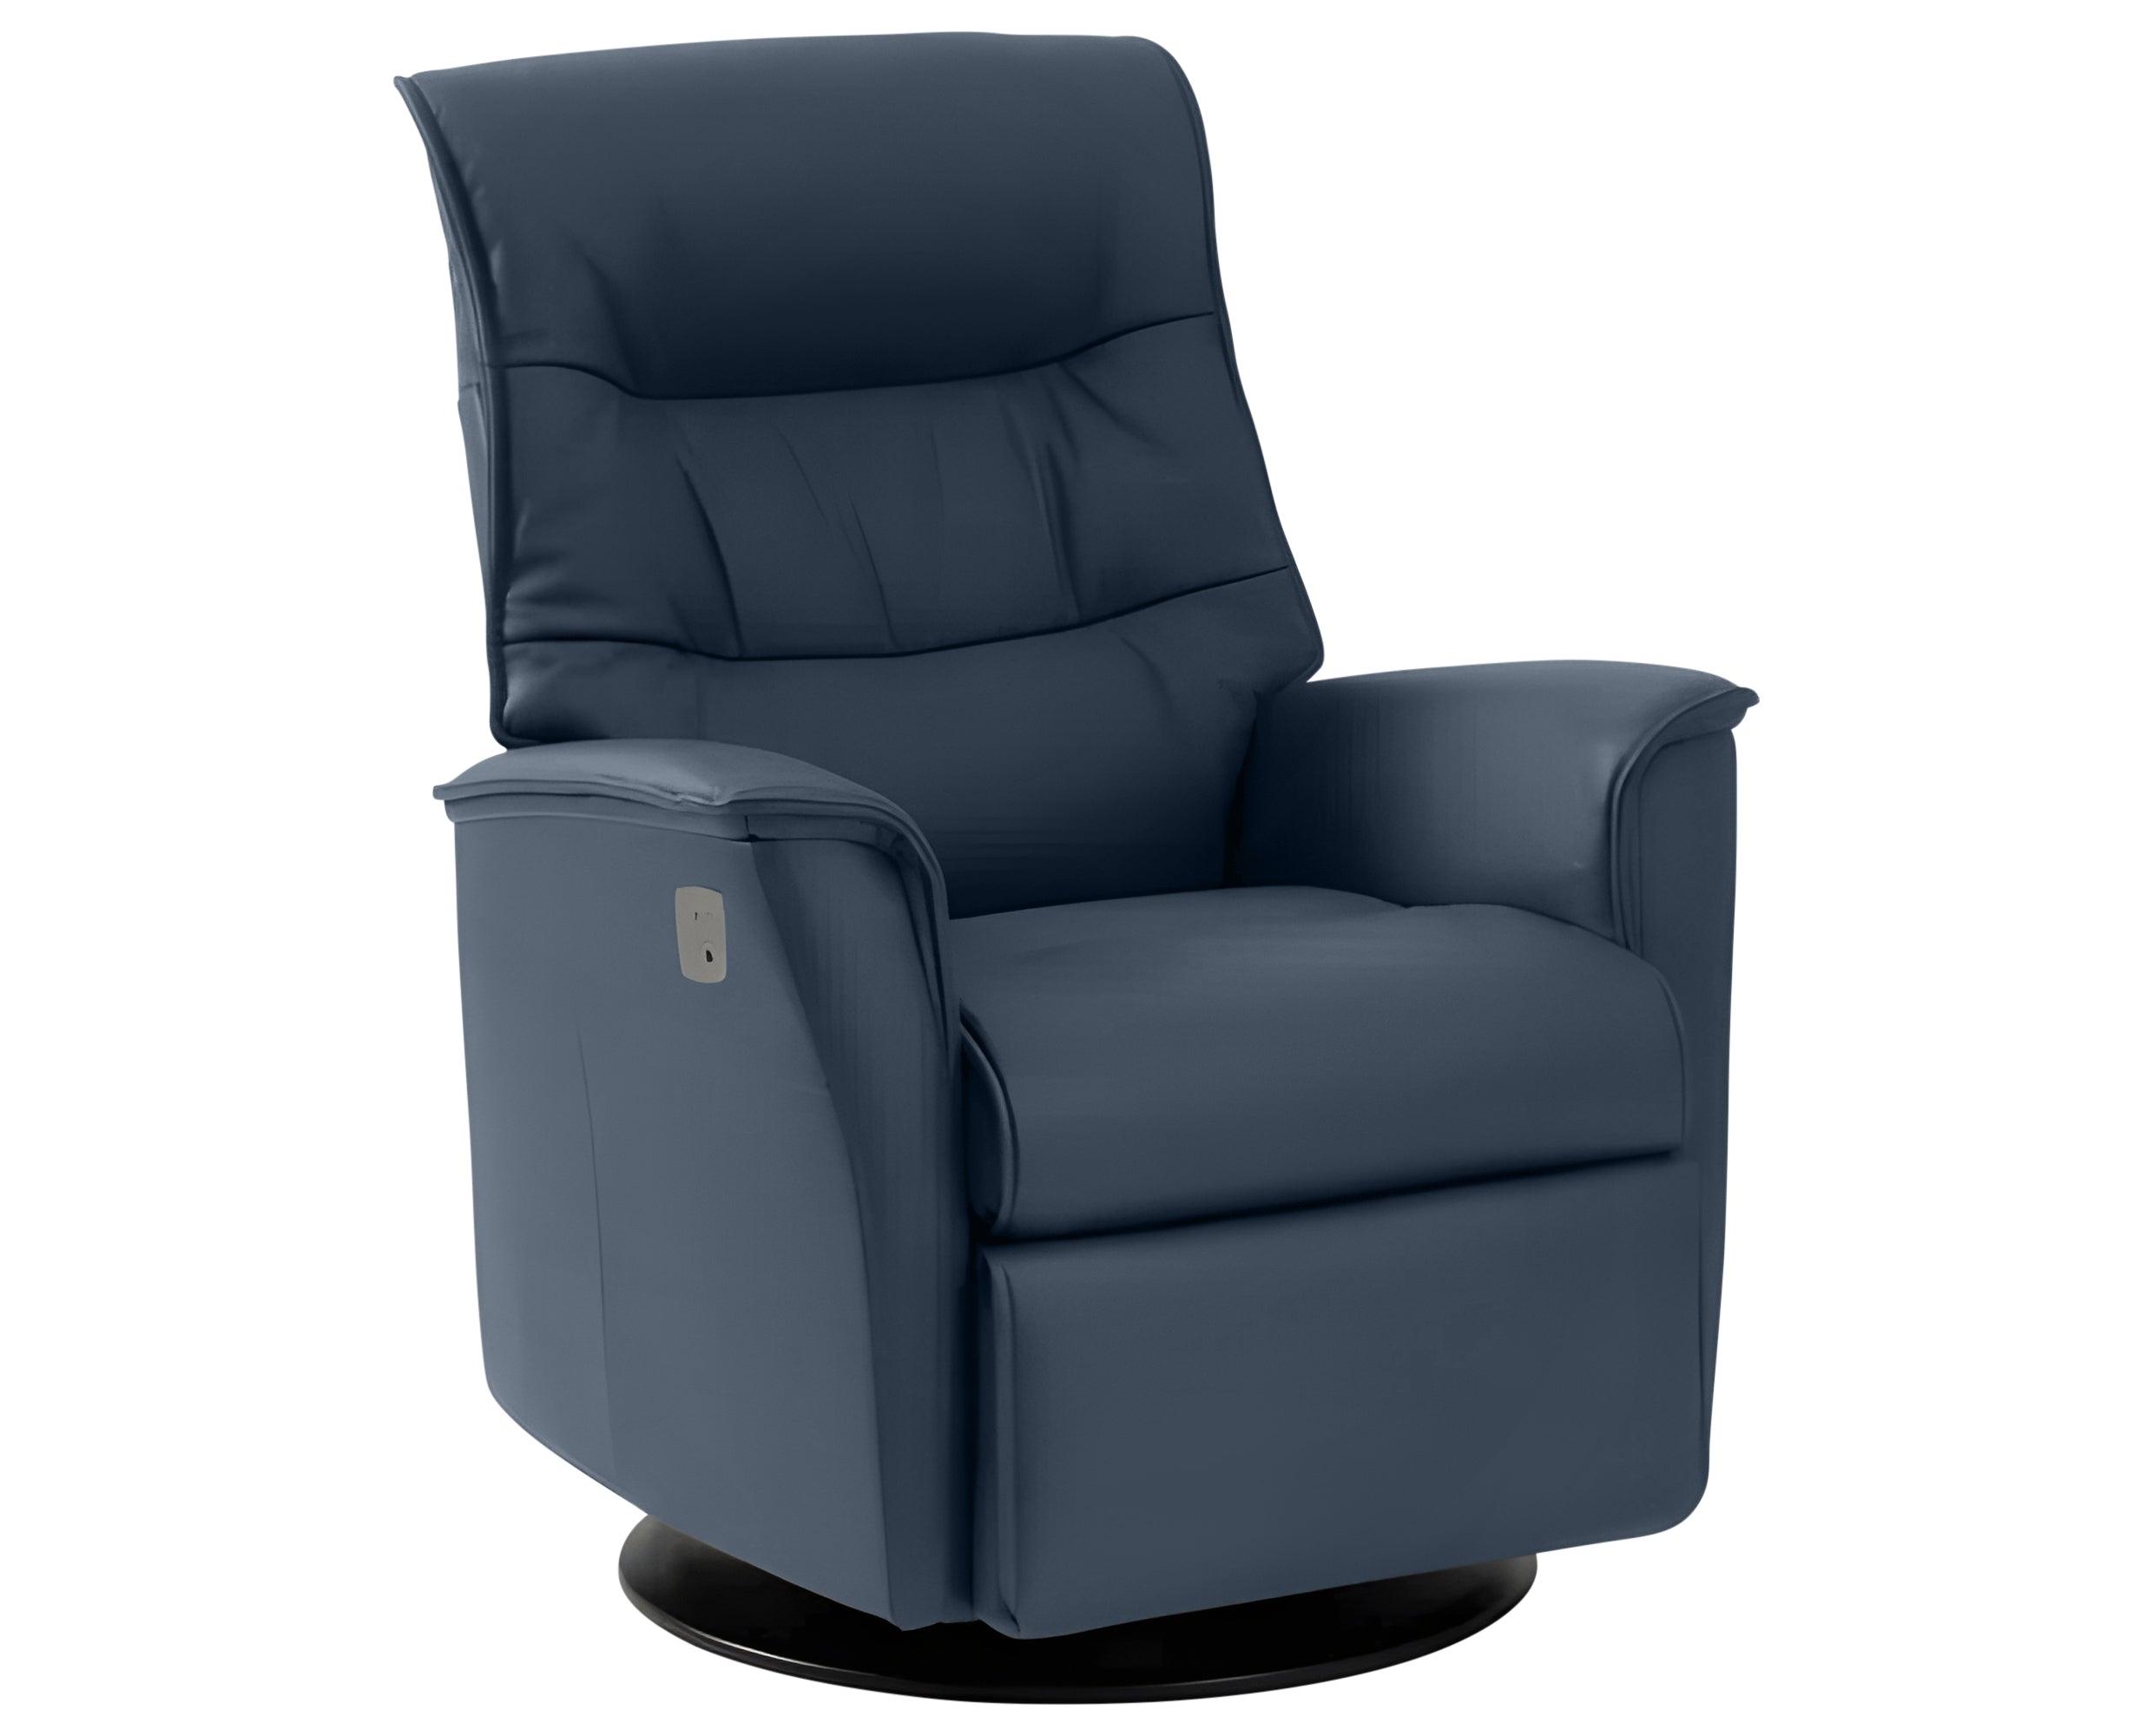 Trend Leather Pacific L | Norwegian Comfort Paramount Recliner - Promo | Valley Ridge Furniture